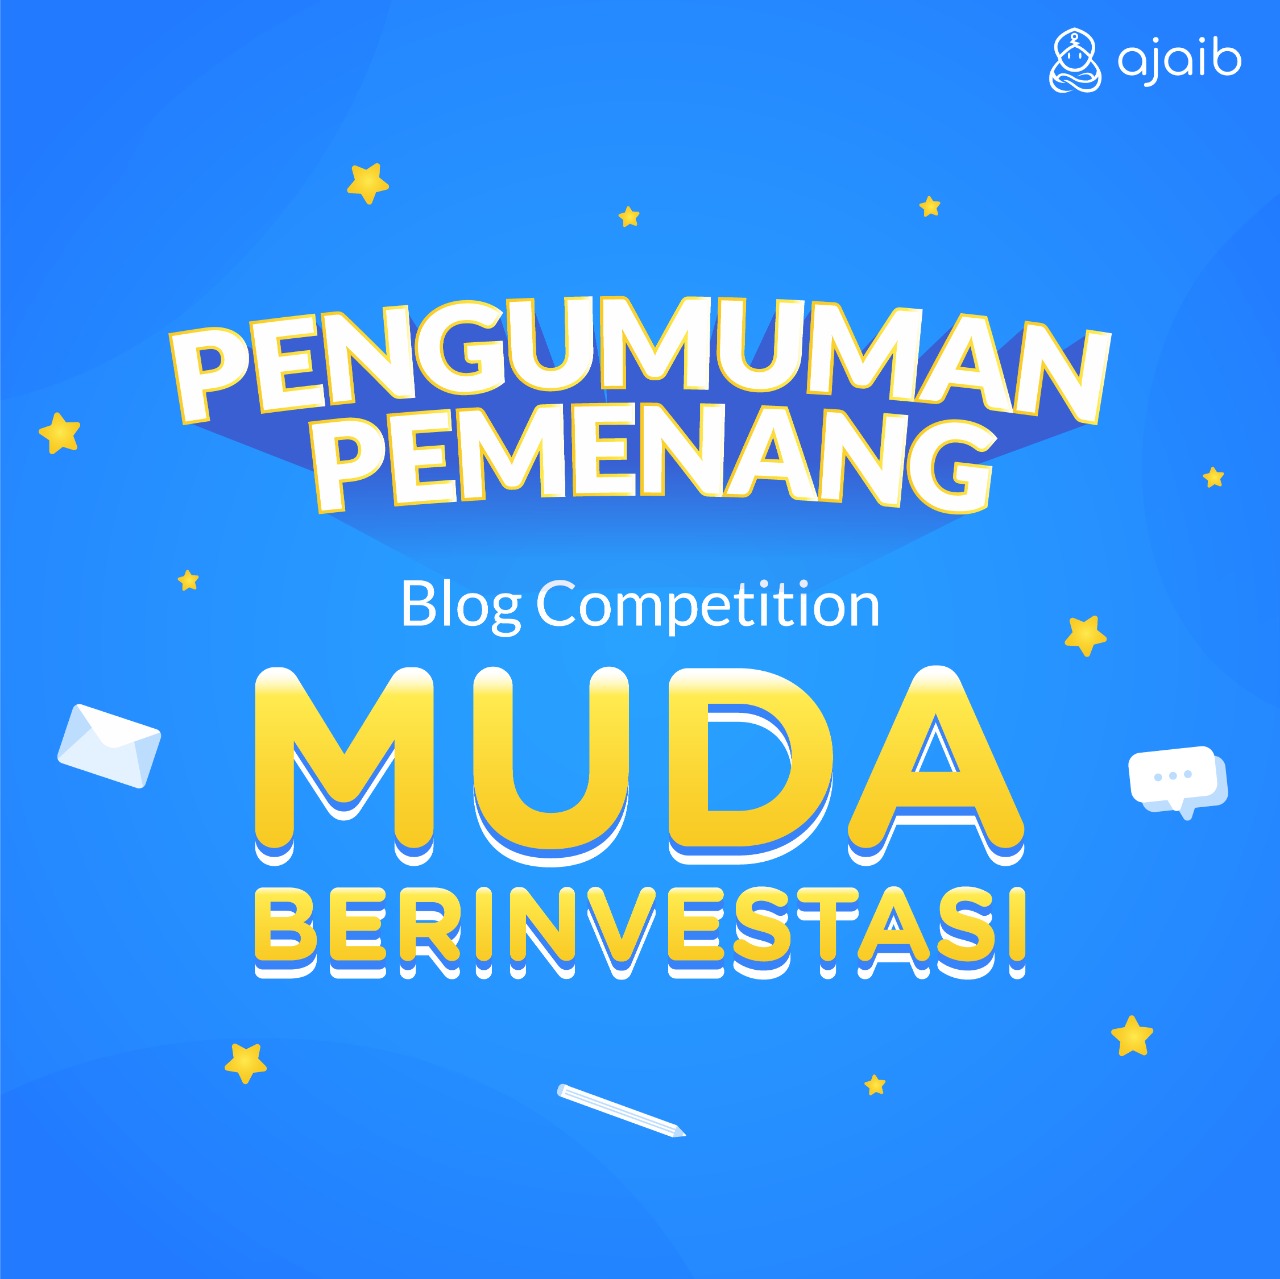 Pengumuman pemenang AJAIB Blog Competition "Muda Berinvestasi"